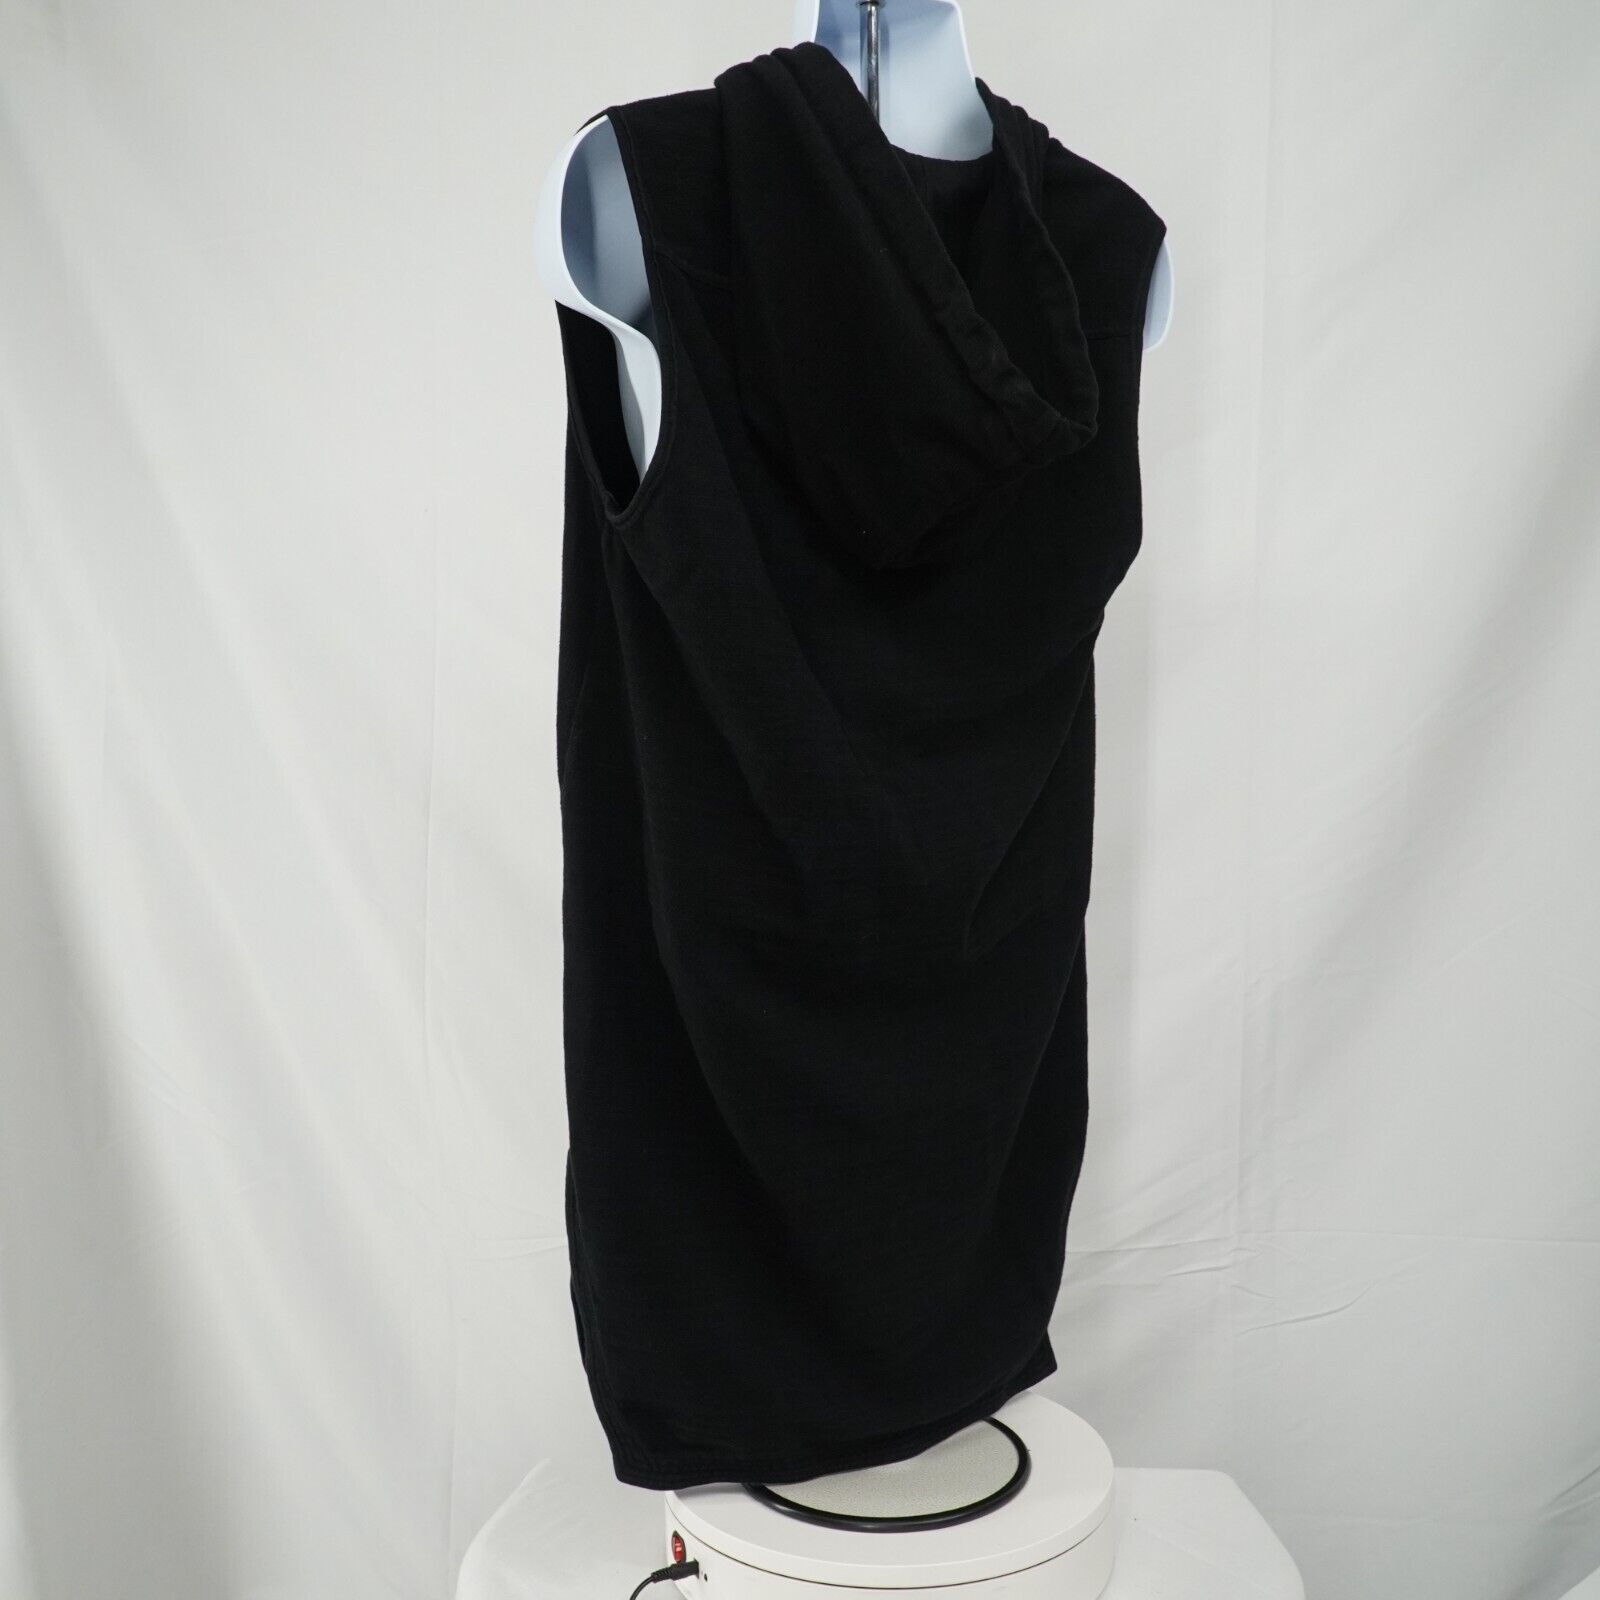 Black Zip Up Sleeveless Jacket Hoodie Cotton - Medium - 13